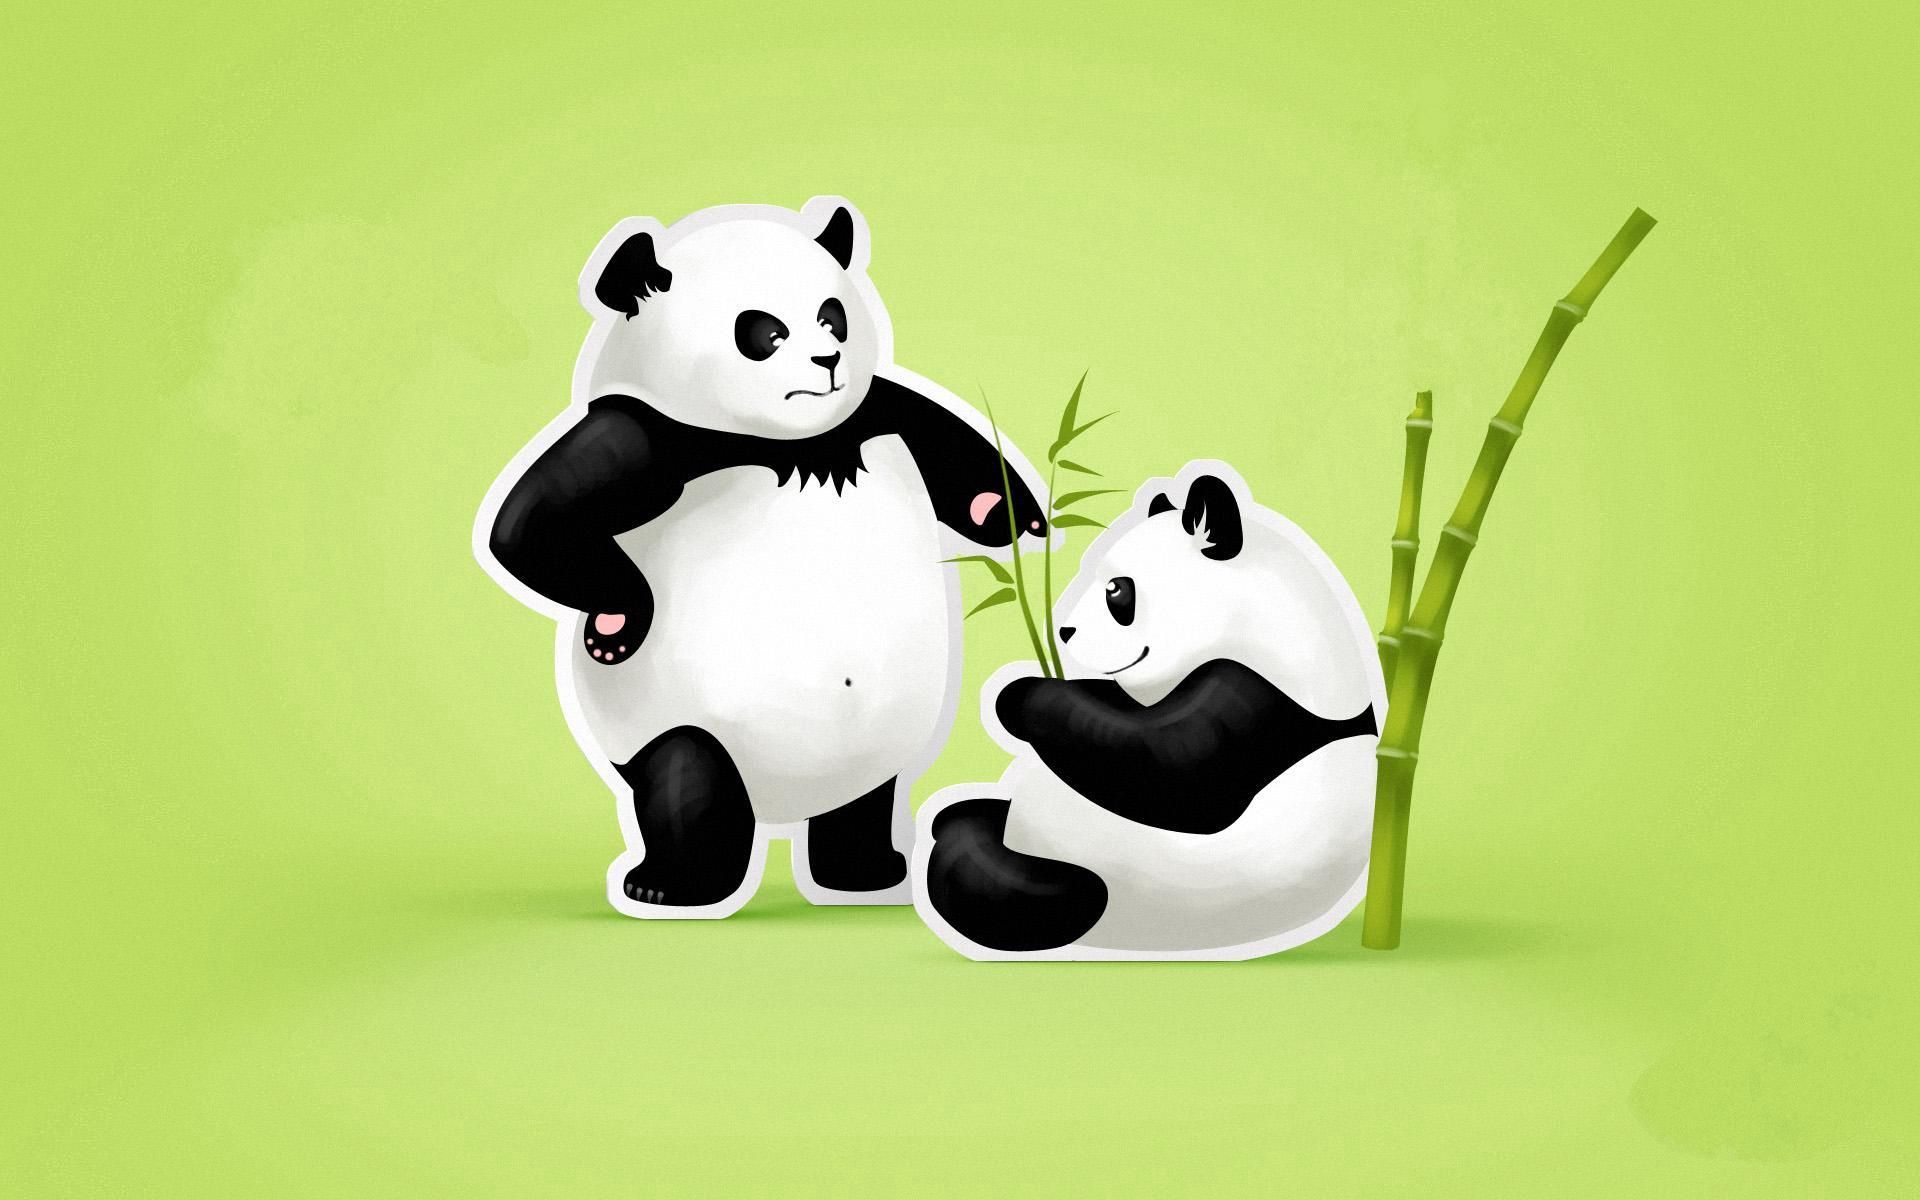 Download wallpaper 1920x1200 panda, couple, threat, quarrel, green, black,  white hd background